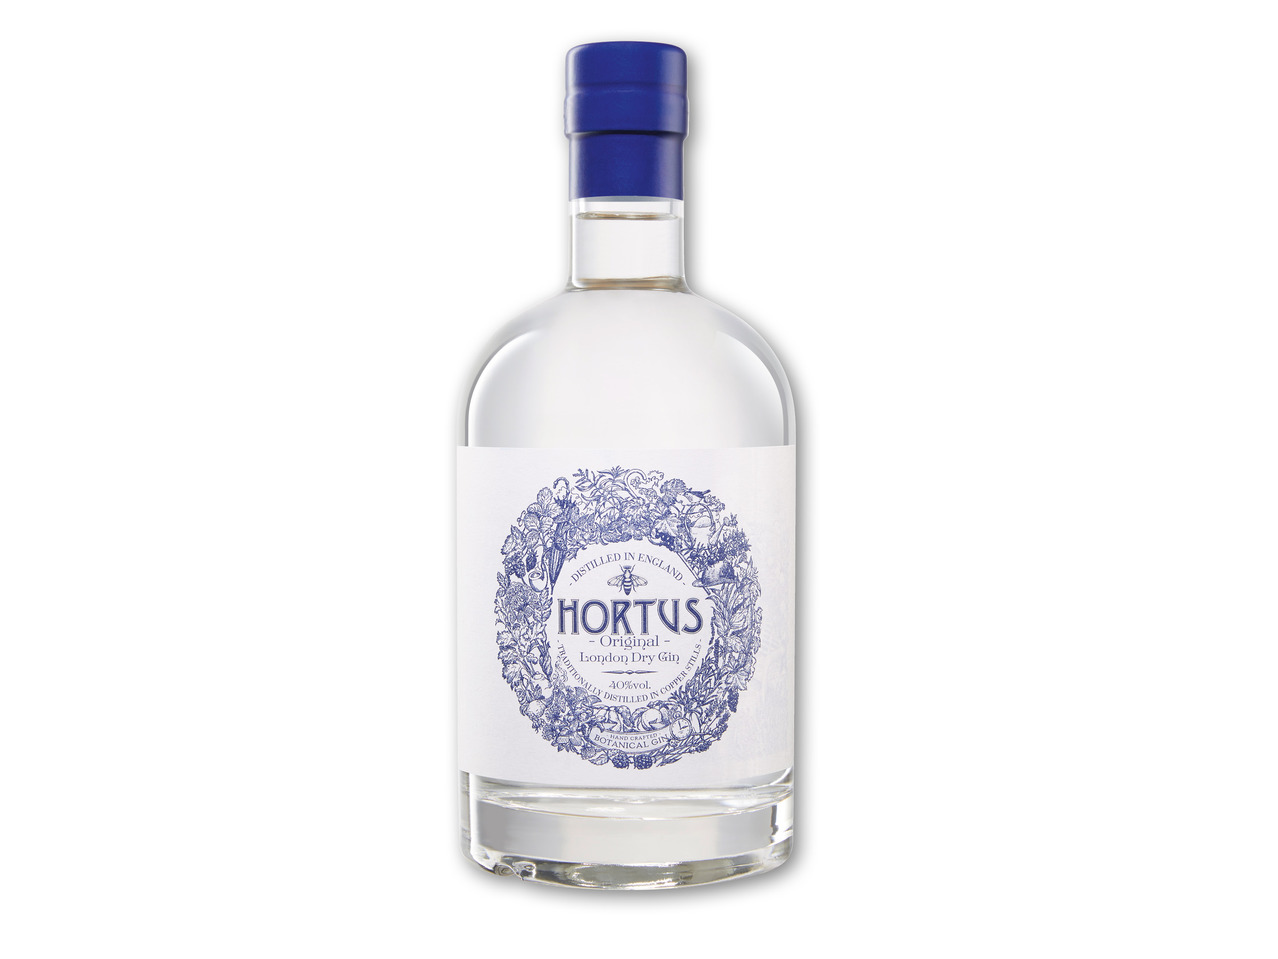 HORTUS London dry gin1